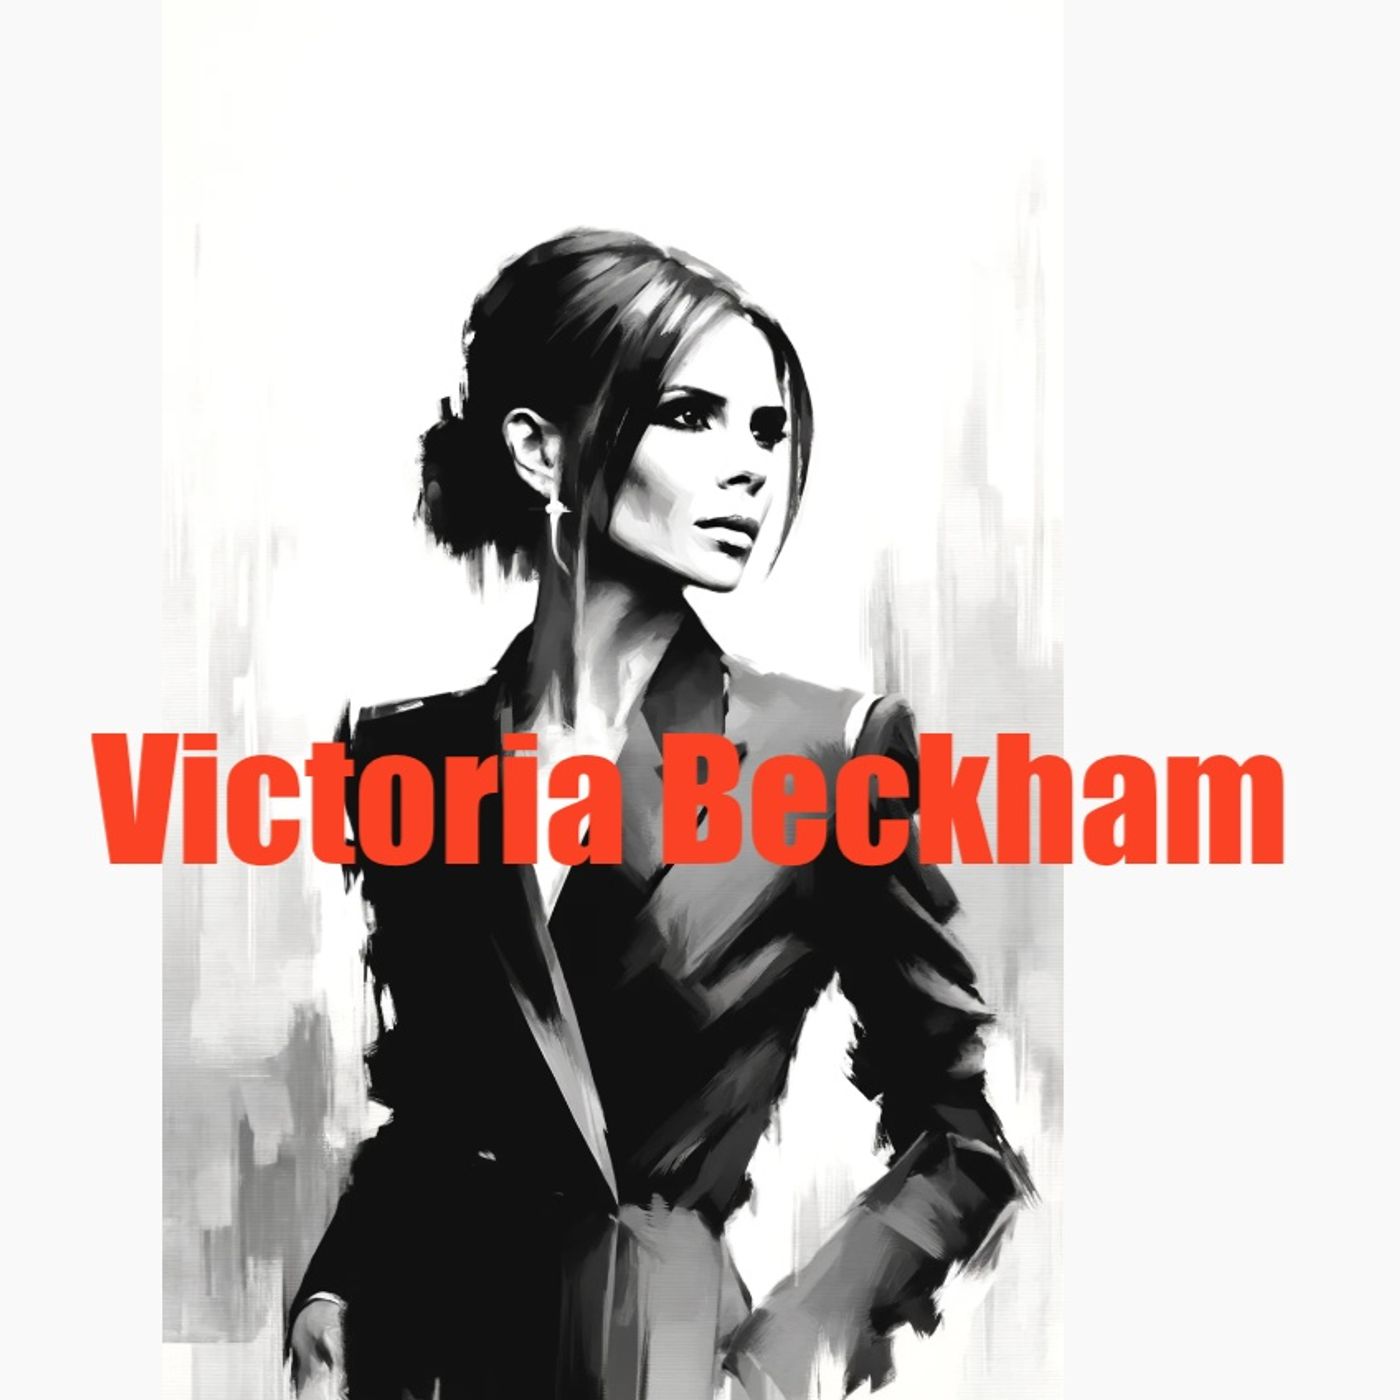 Victoria Beckham-From Posh Spice to Fashion Mogul